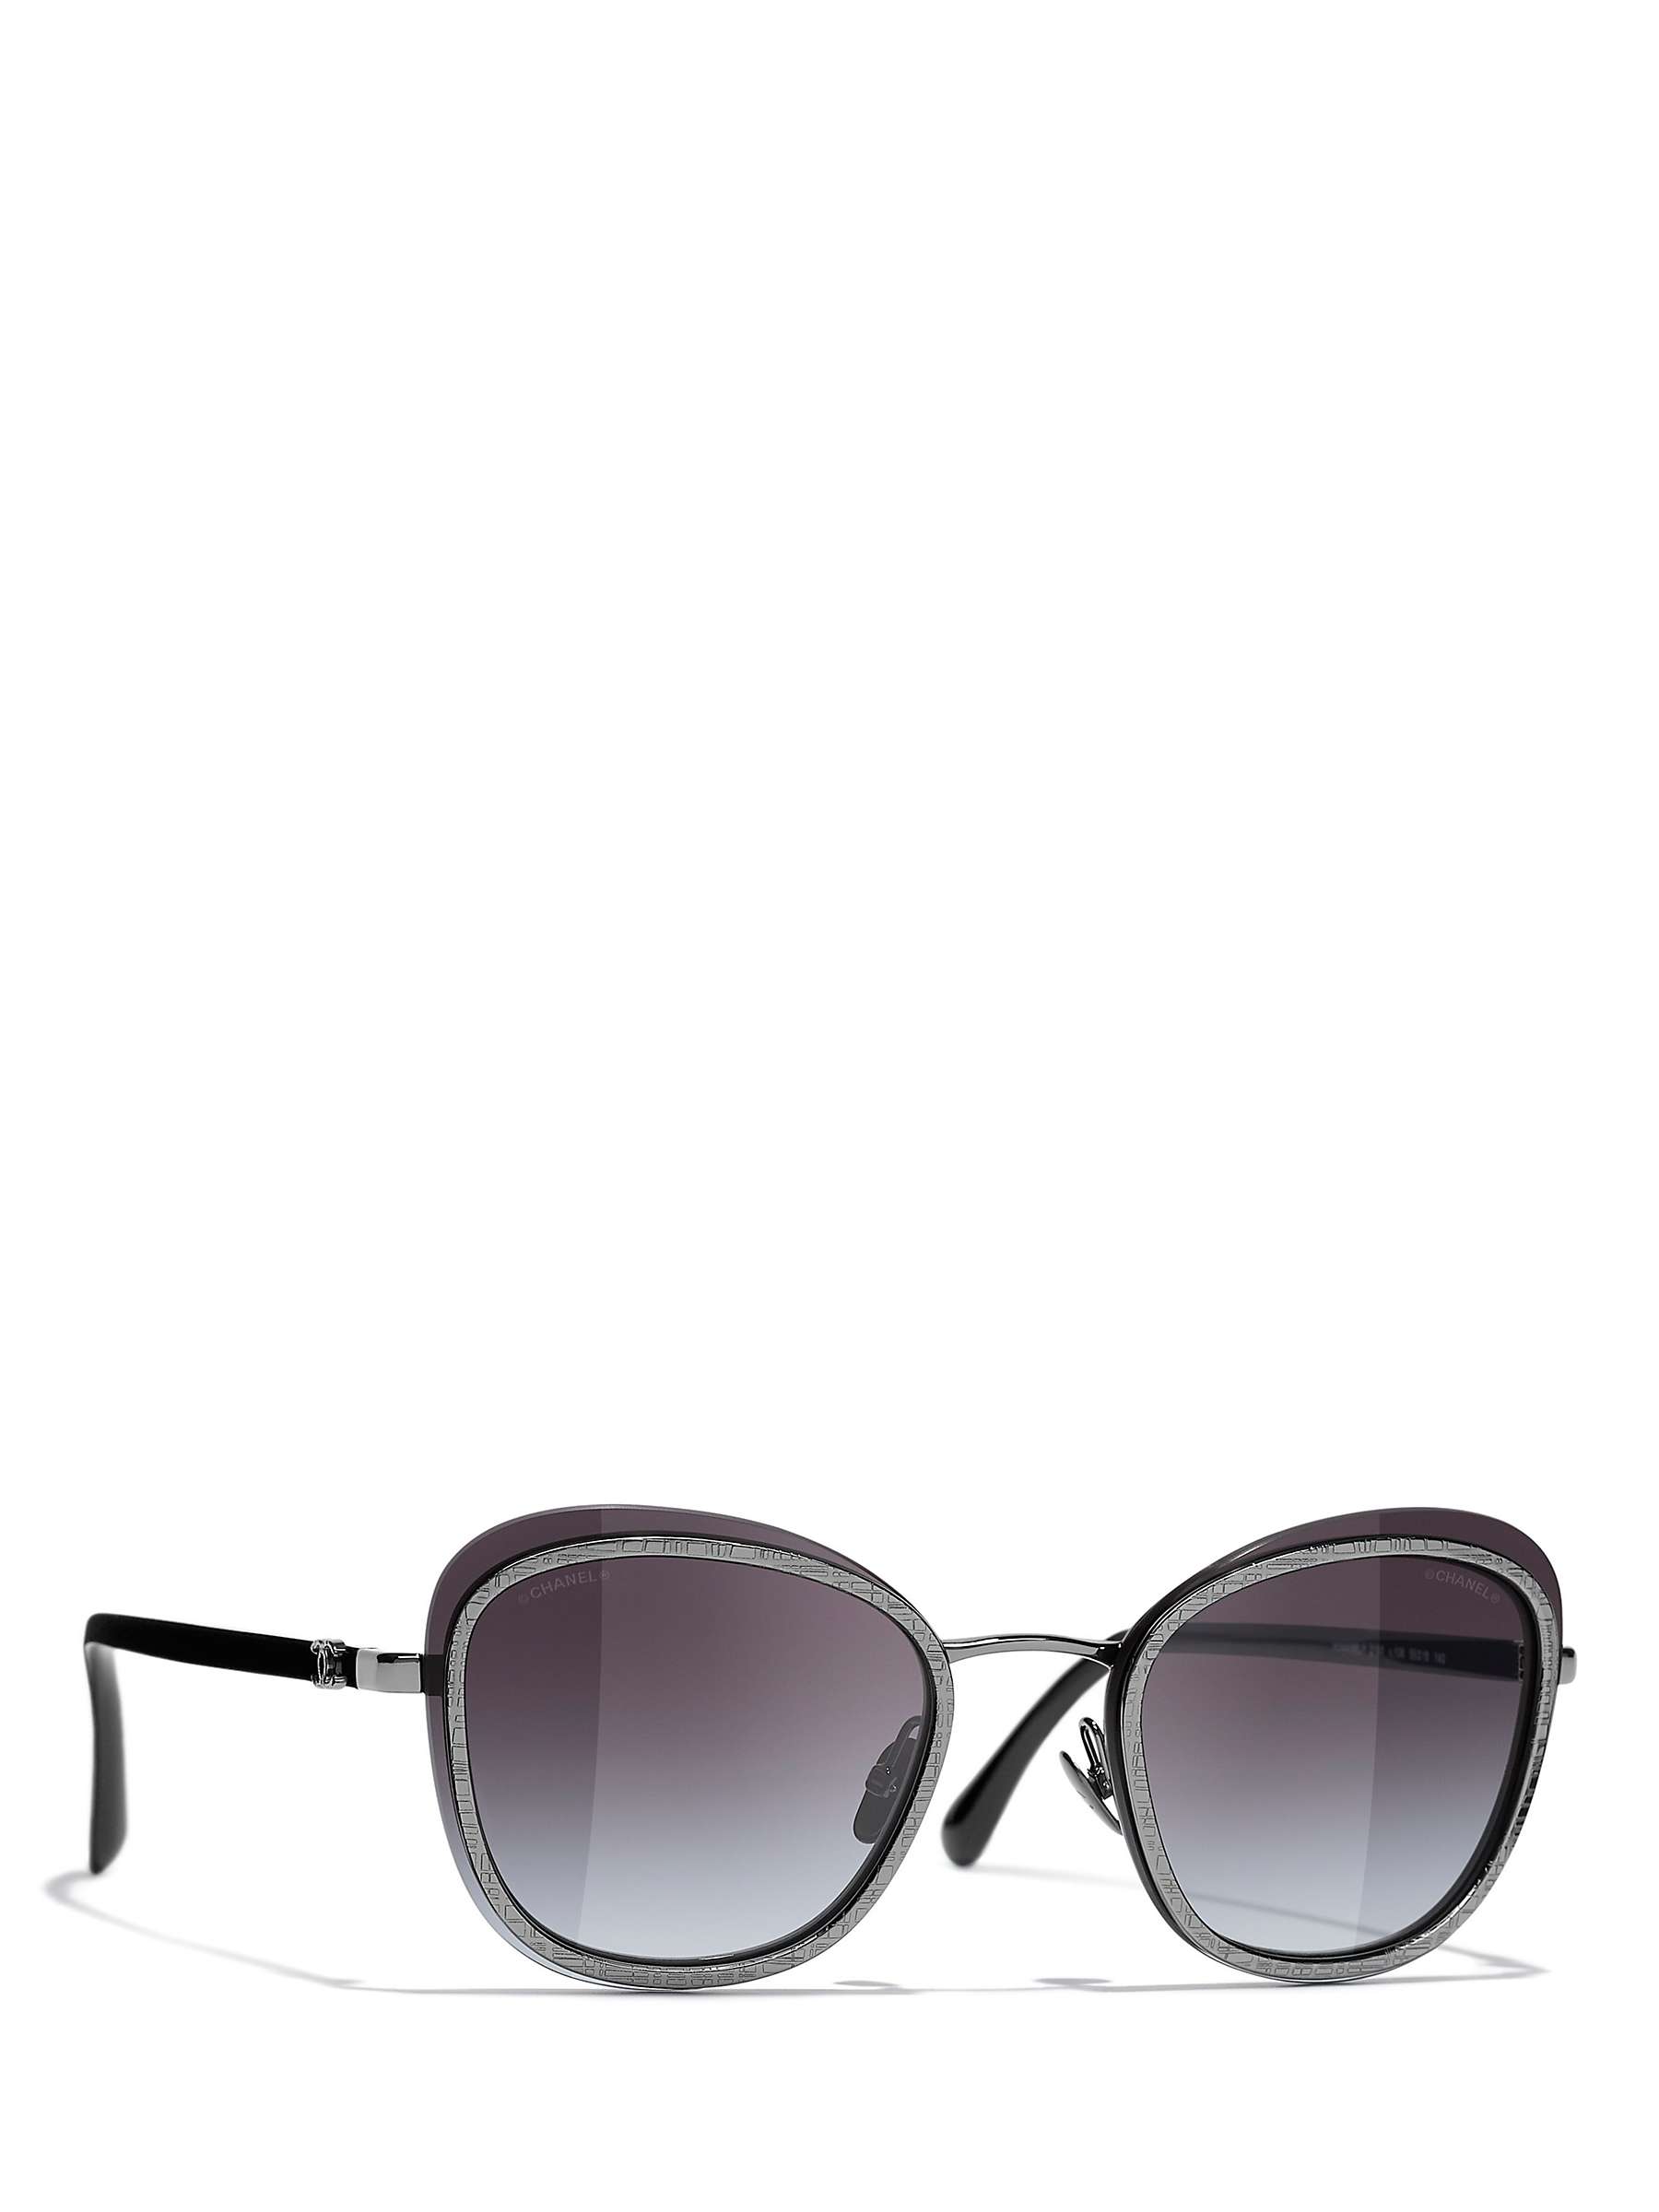 Buy CHANEL Oval Sunglasses CH4264 Gunmetal/Grey Gradient Online at johnlewis.com